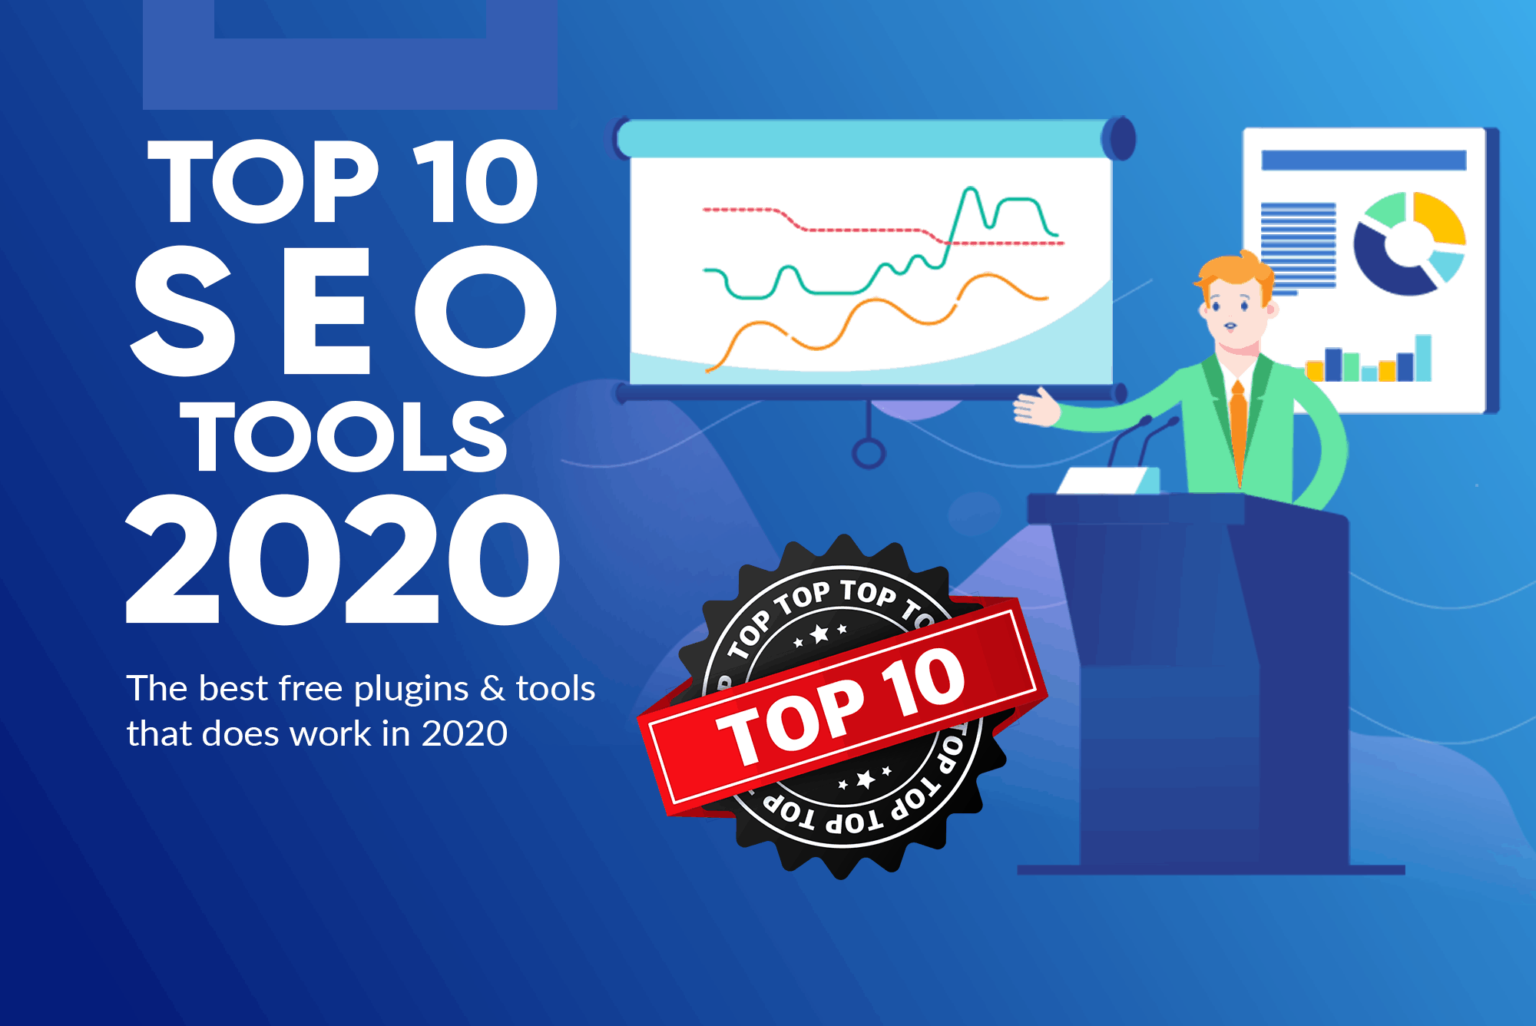 Top 10 Seo Tools And Plugins In 2020 Top10digital 9551